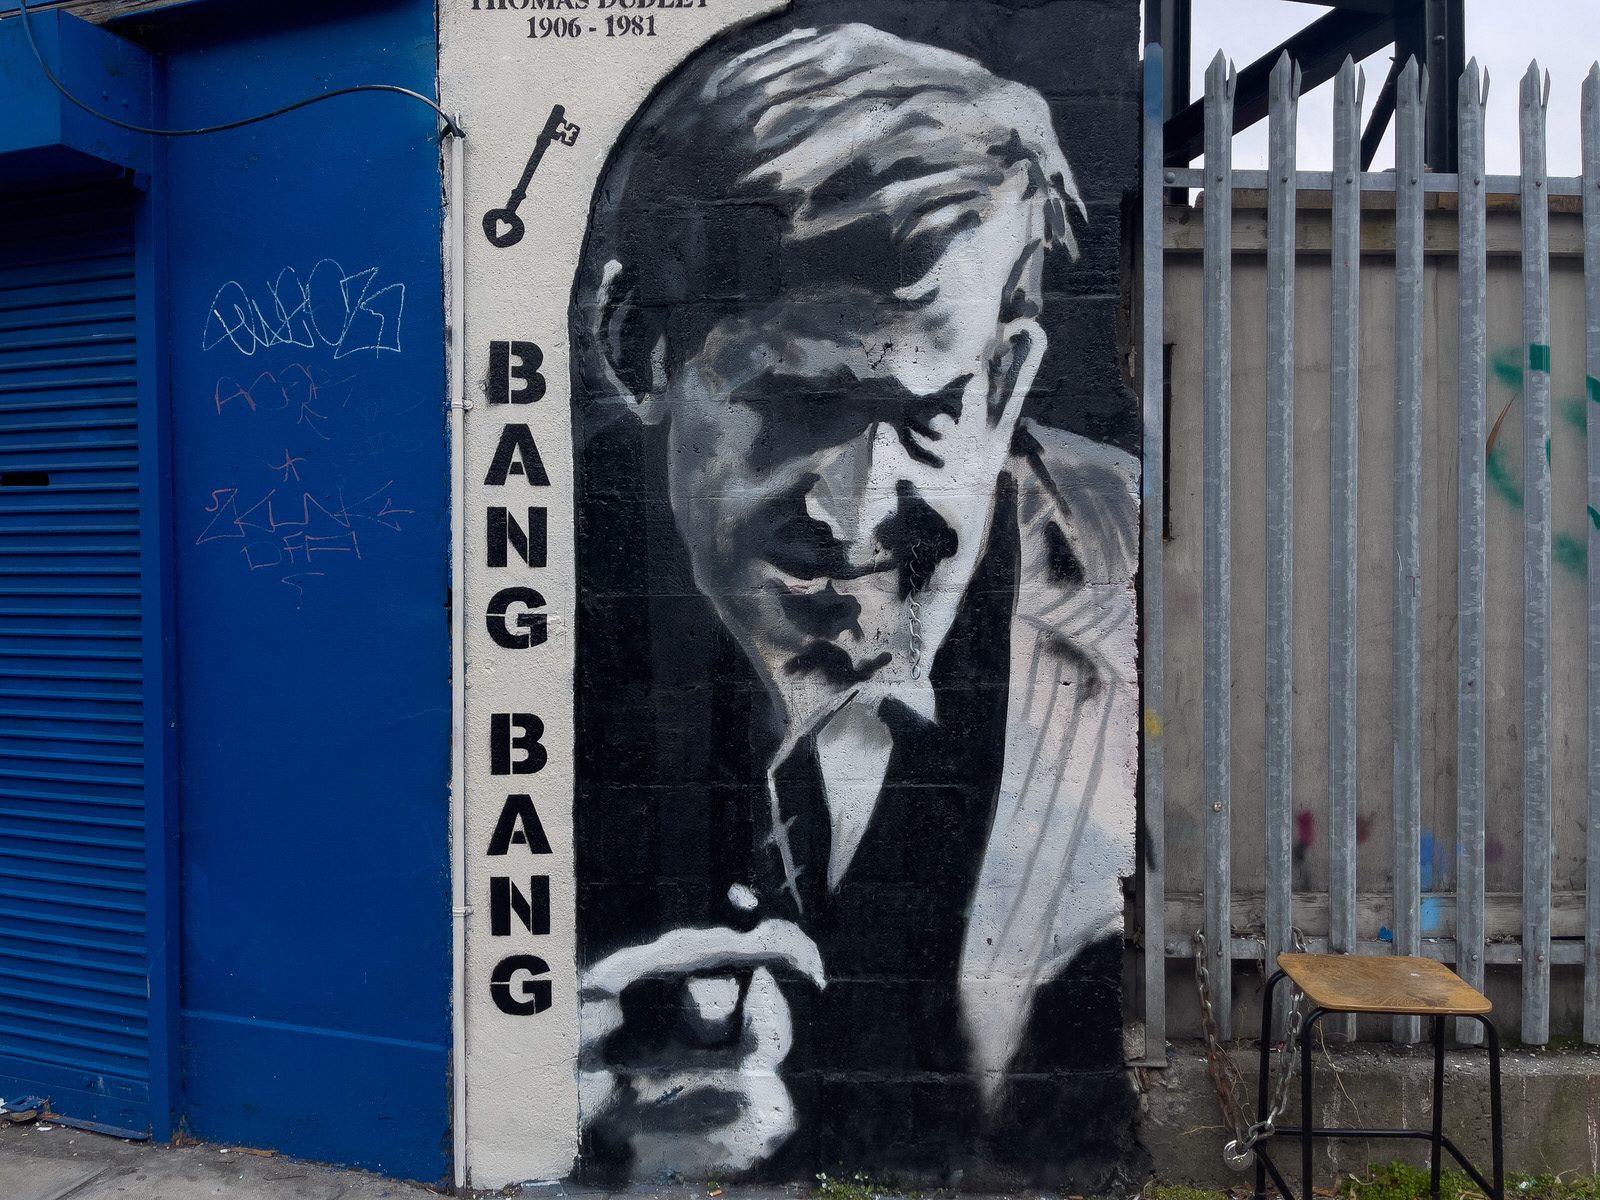 REMEMBERING THOMAS DUDLEY 1906-1981 WHO WAS KNOWN AS BANG BANG [DUBLIN STREET ART] 002